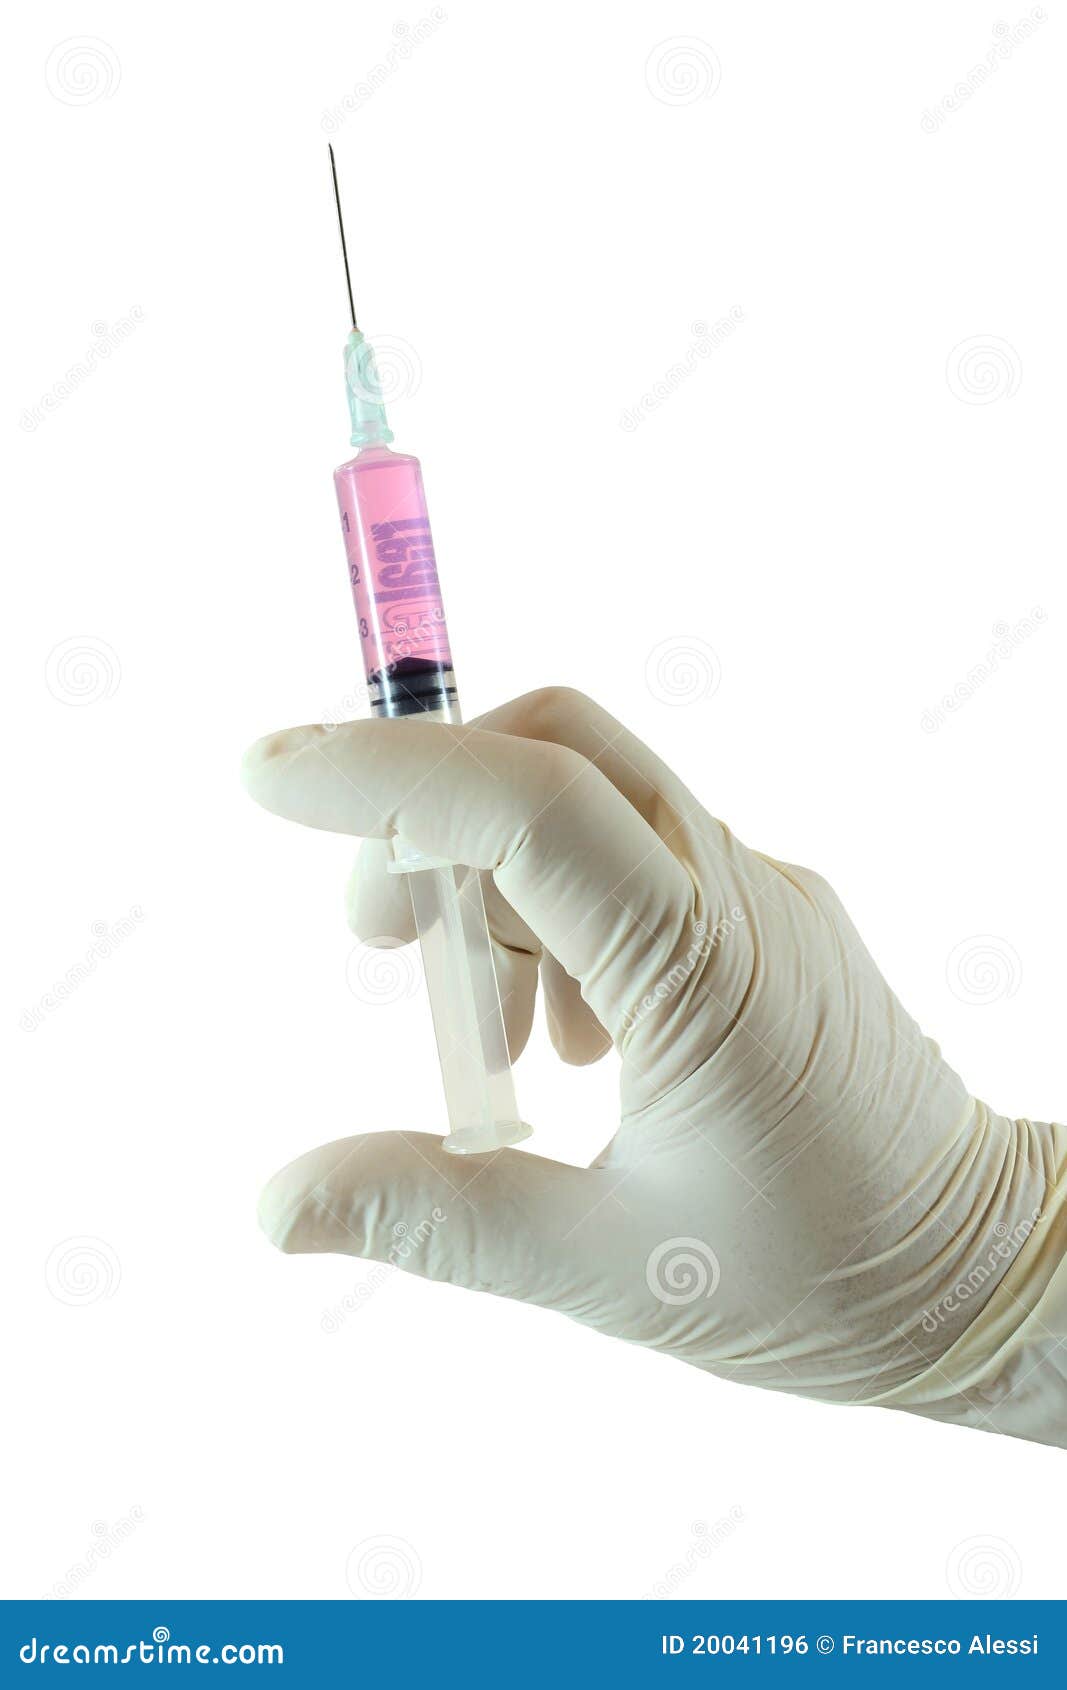 hand with syringe